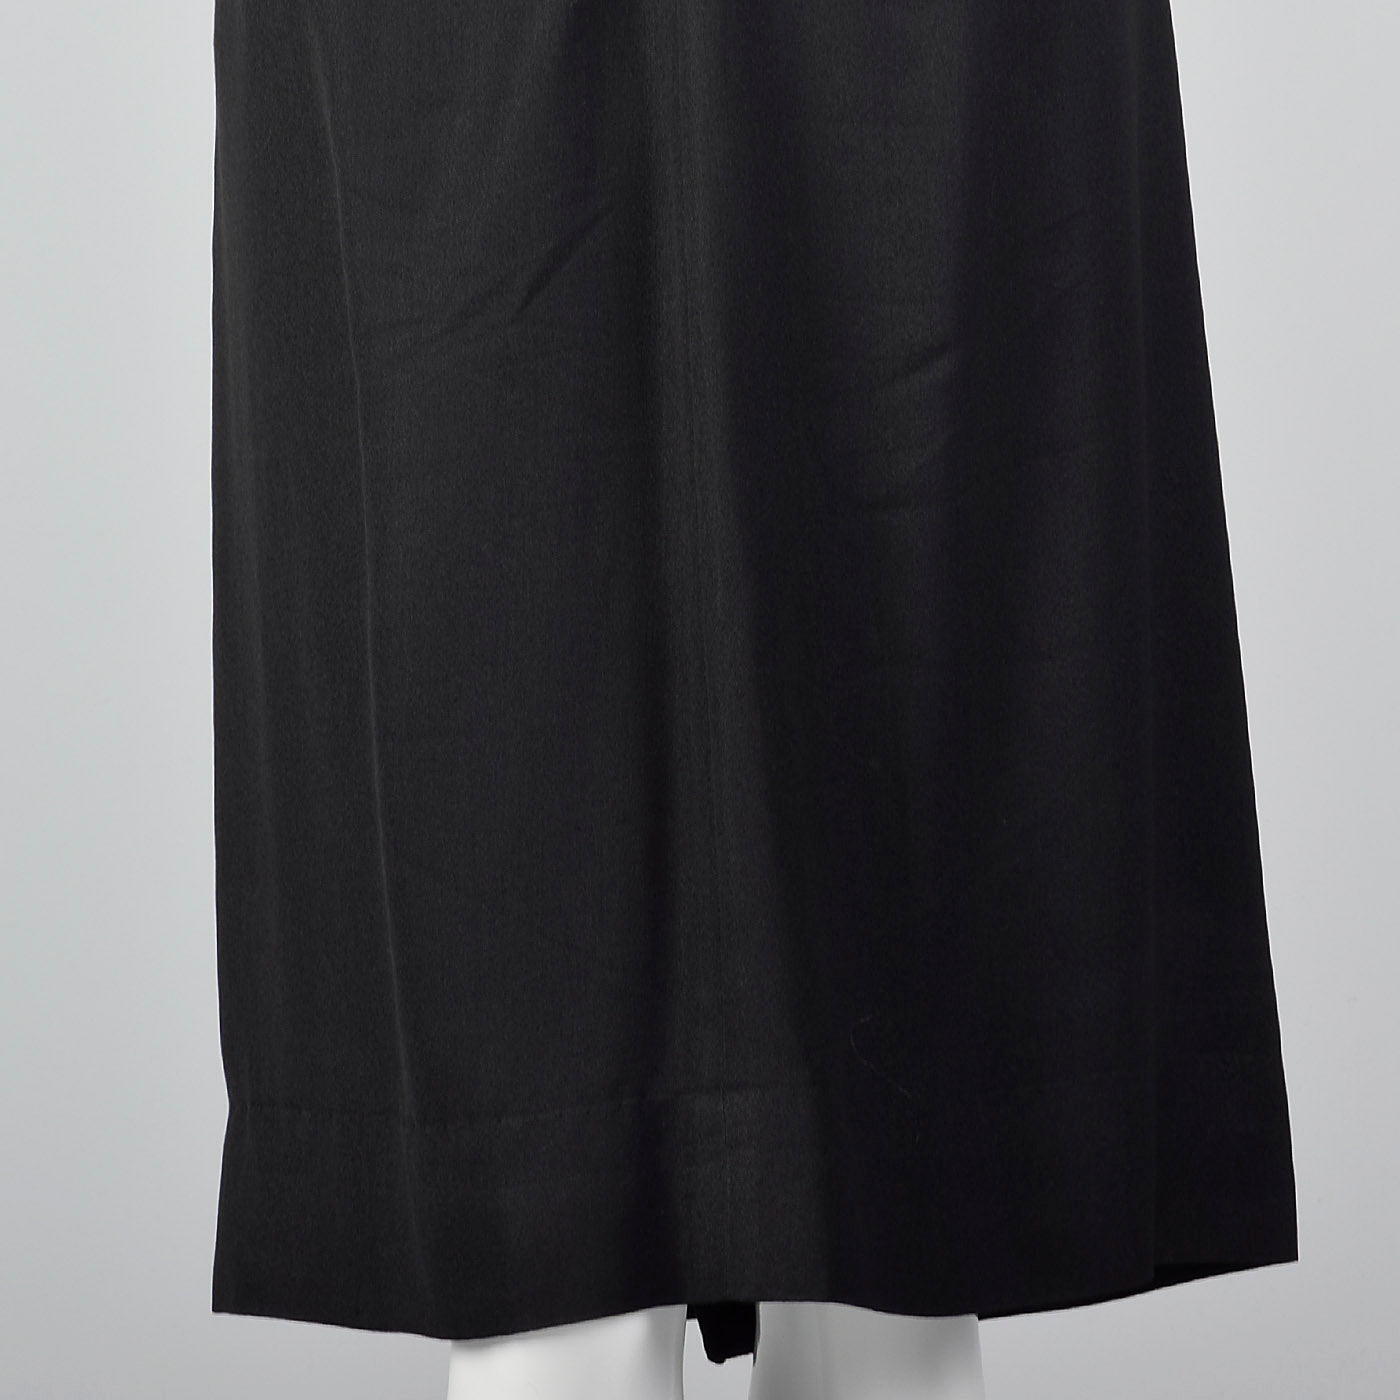 1950s Black Rayon Dress with Gathered Bodice